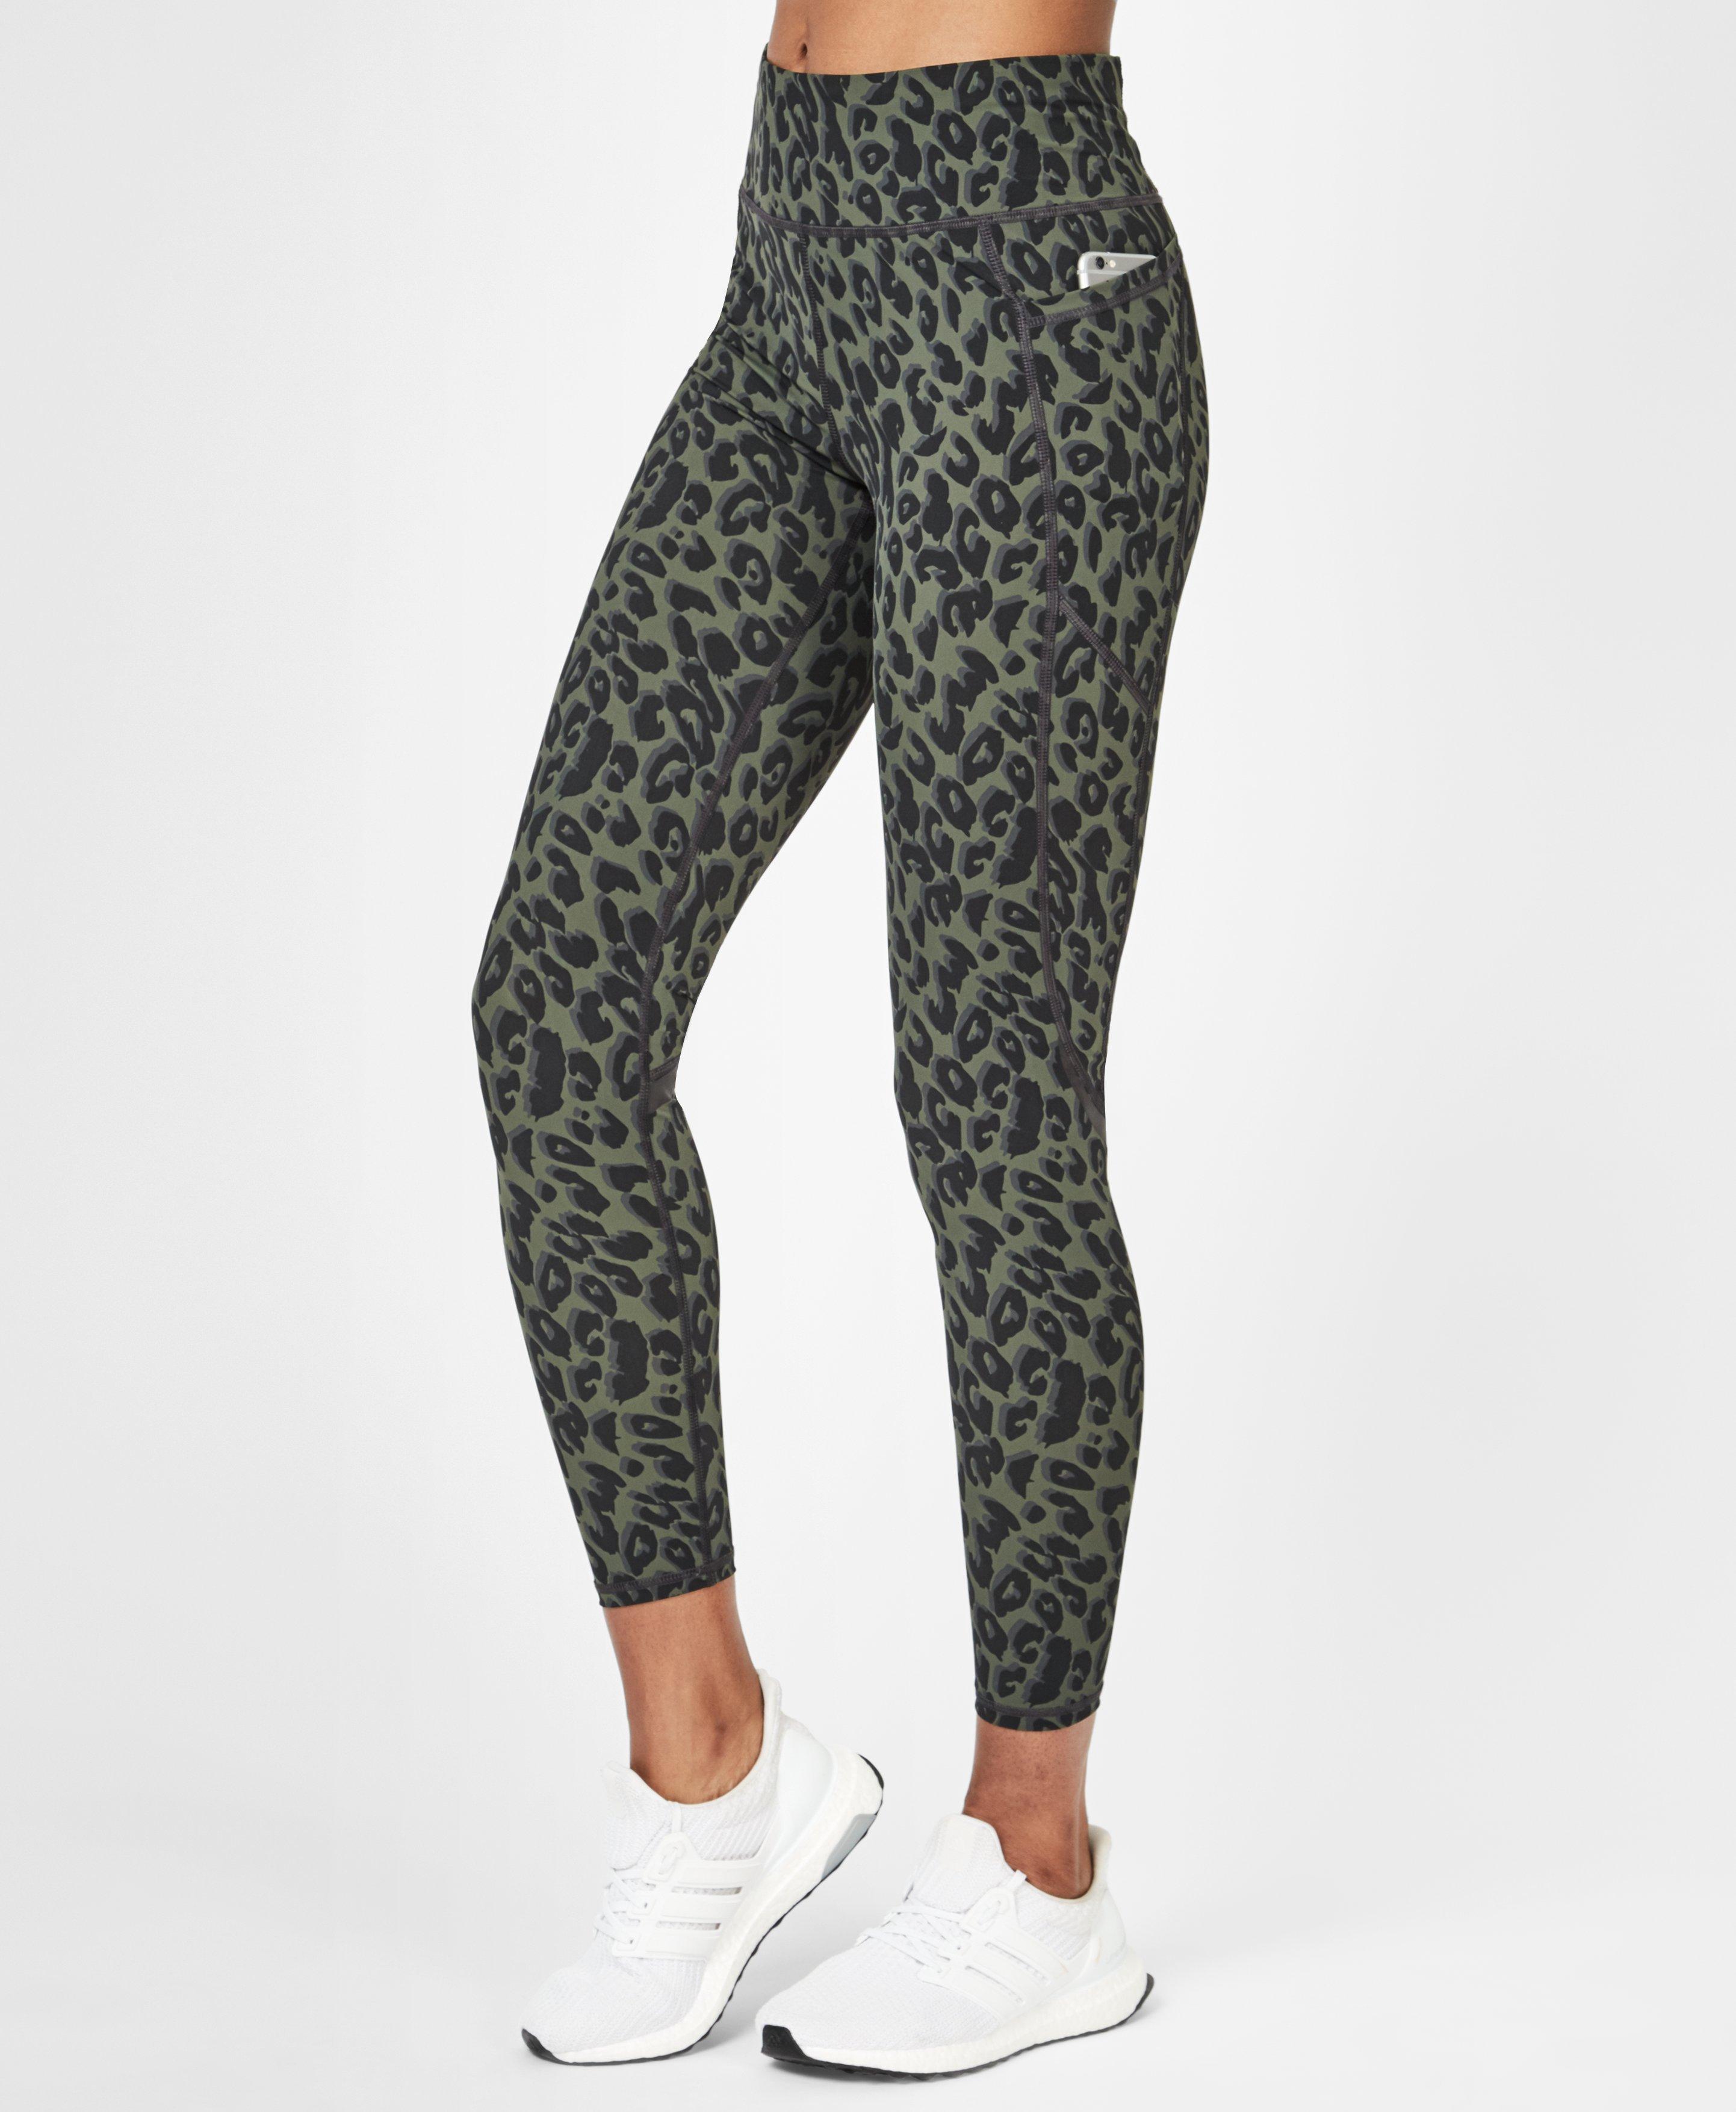 leopard gym leggings